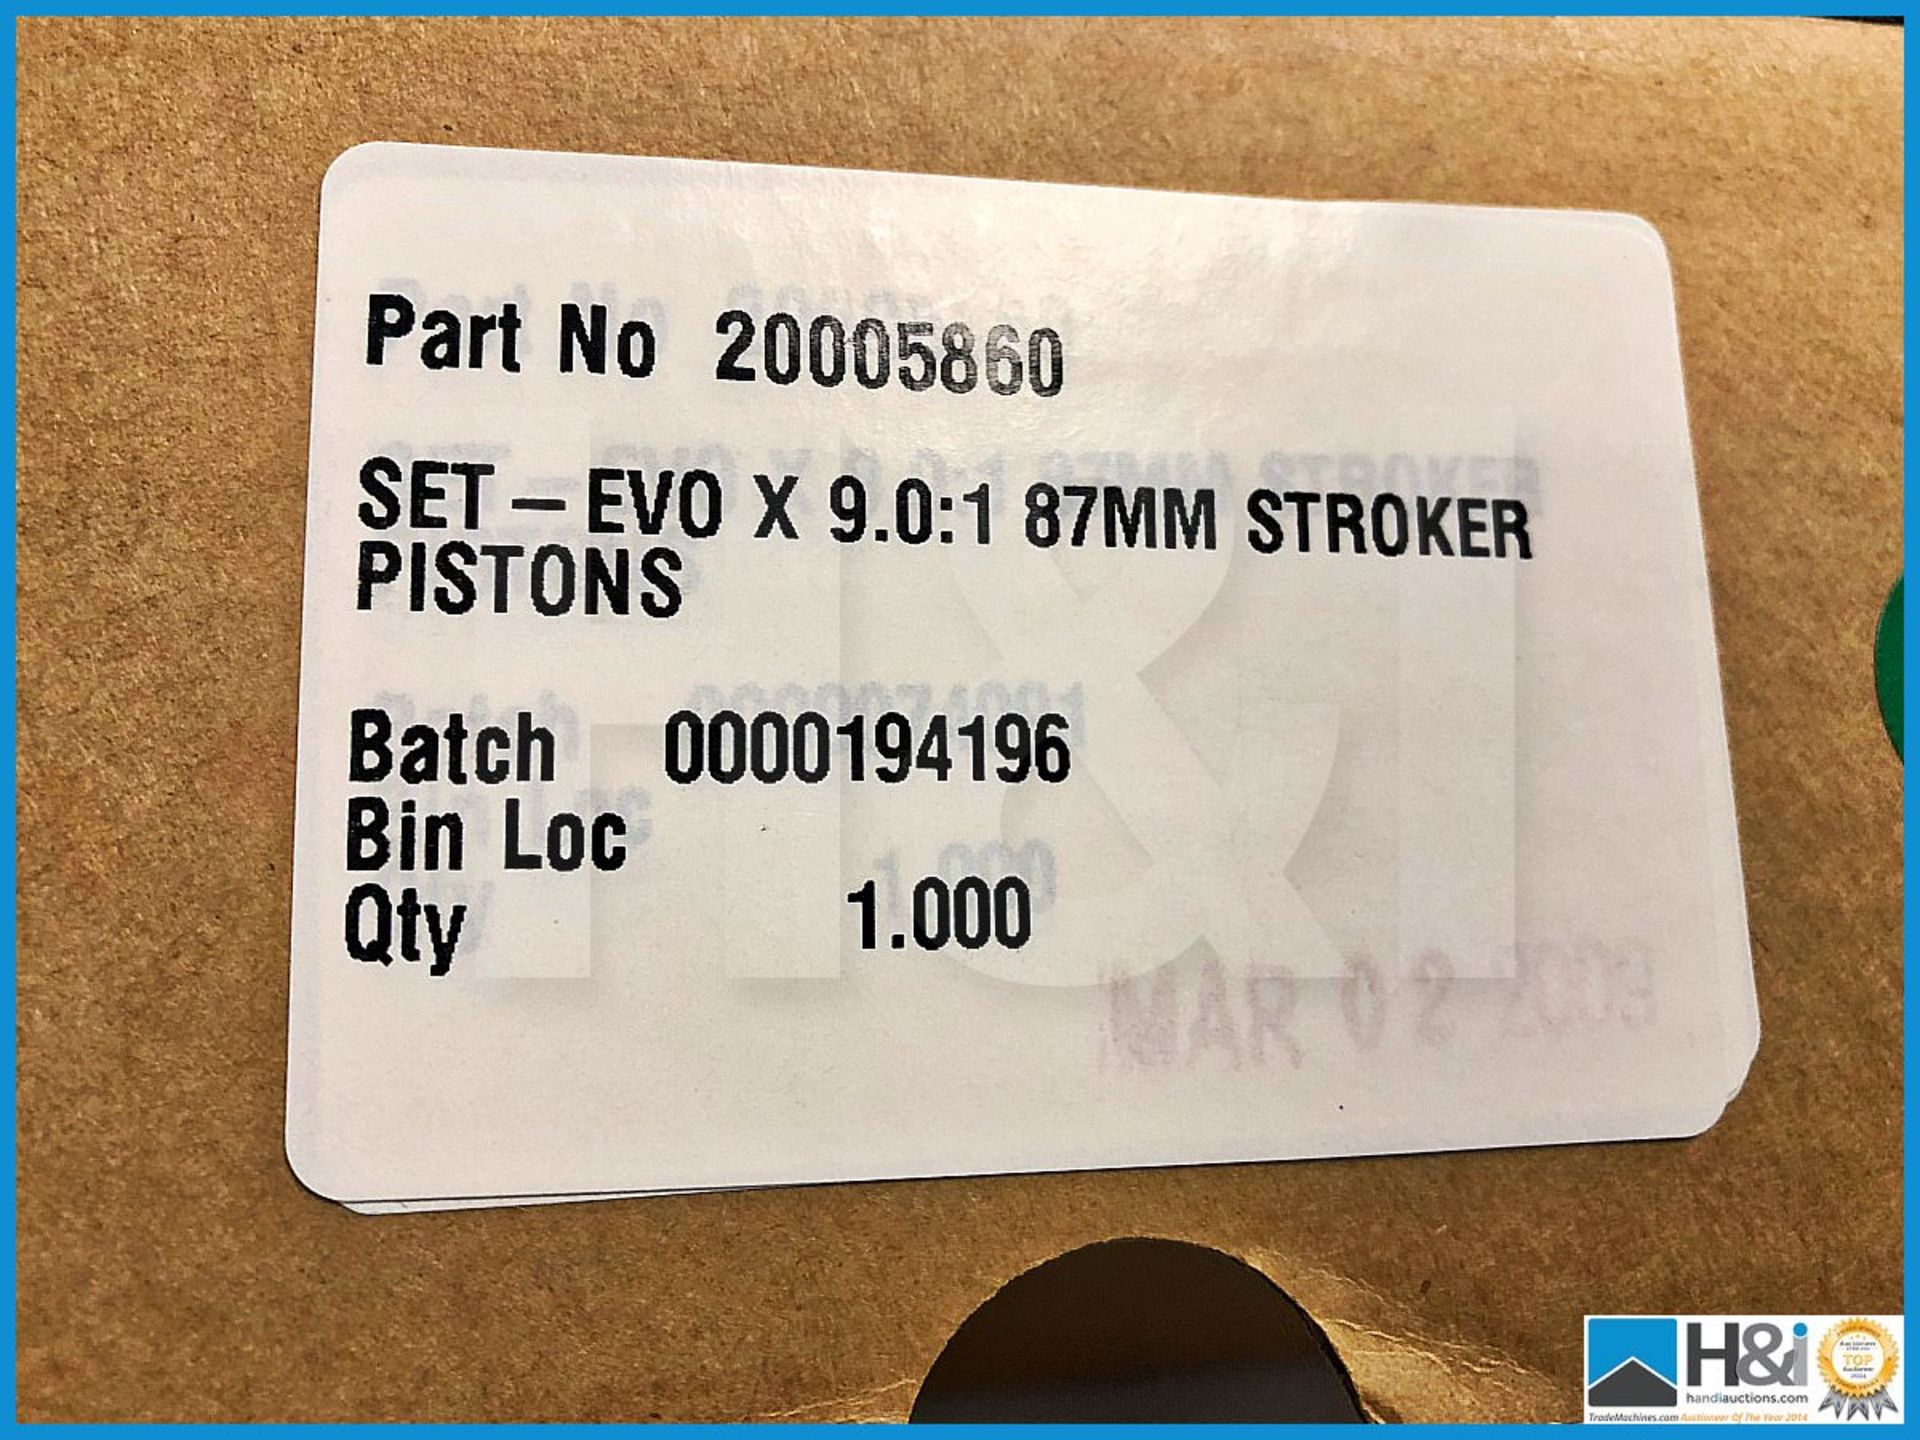 7 x sets of 4 Mitsubishi 4B11T 86mm Evo stroker pistons. Version 2. Code: 20005782 - Image 3 of 3